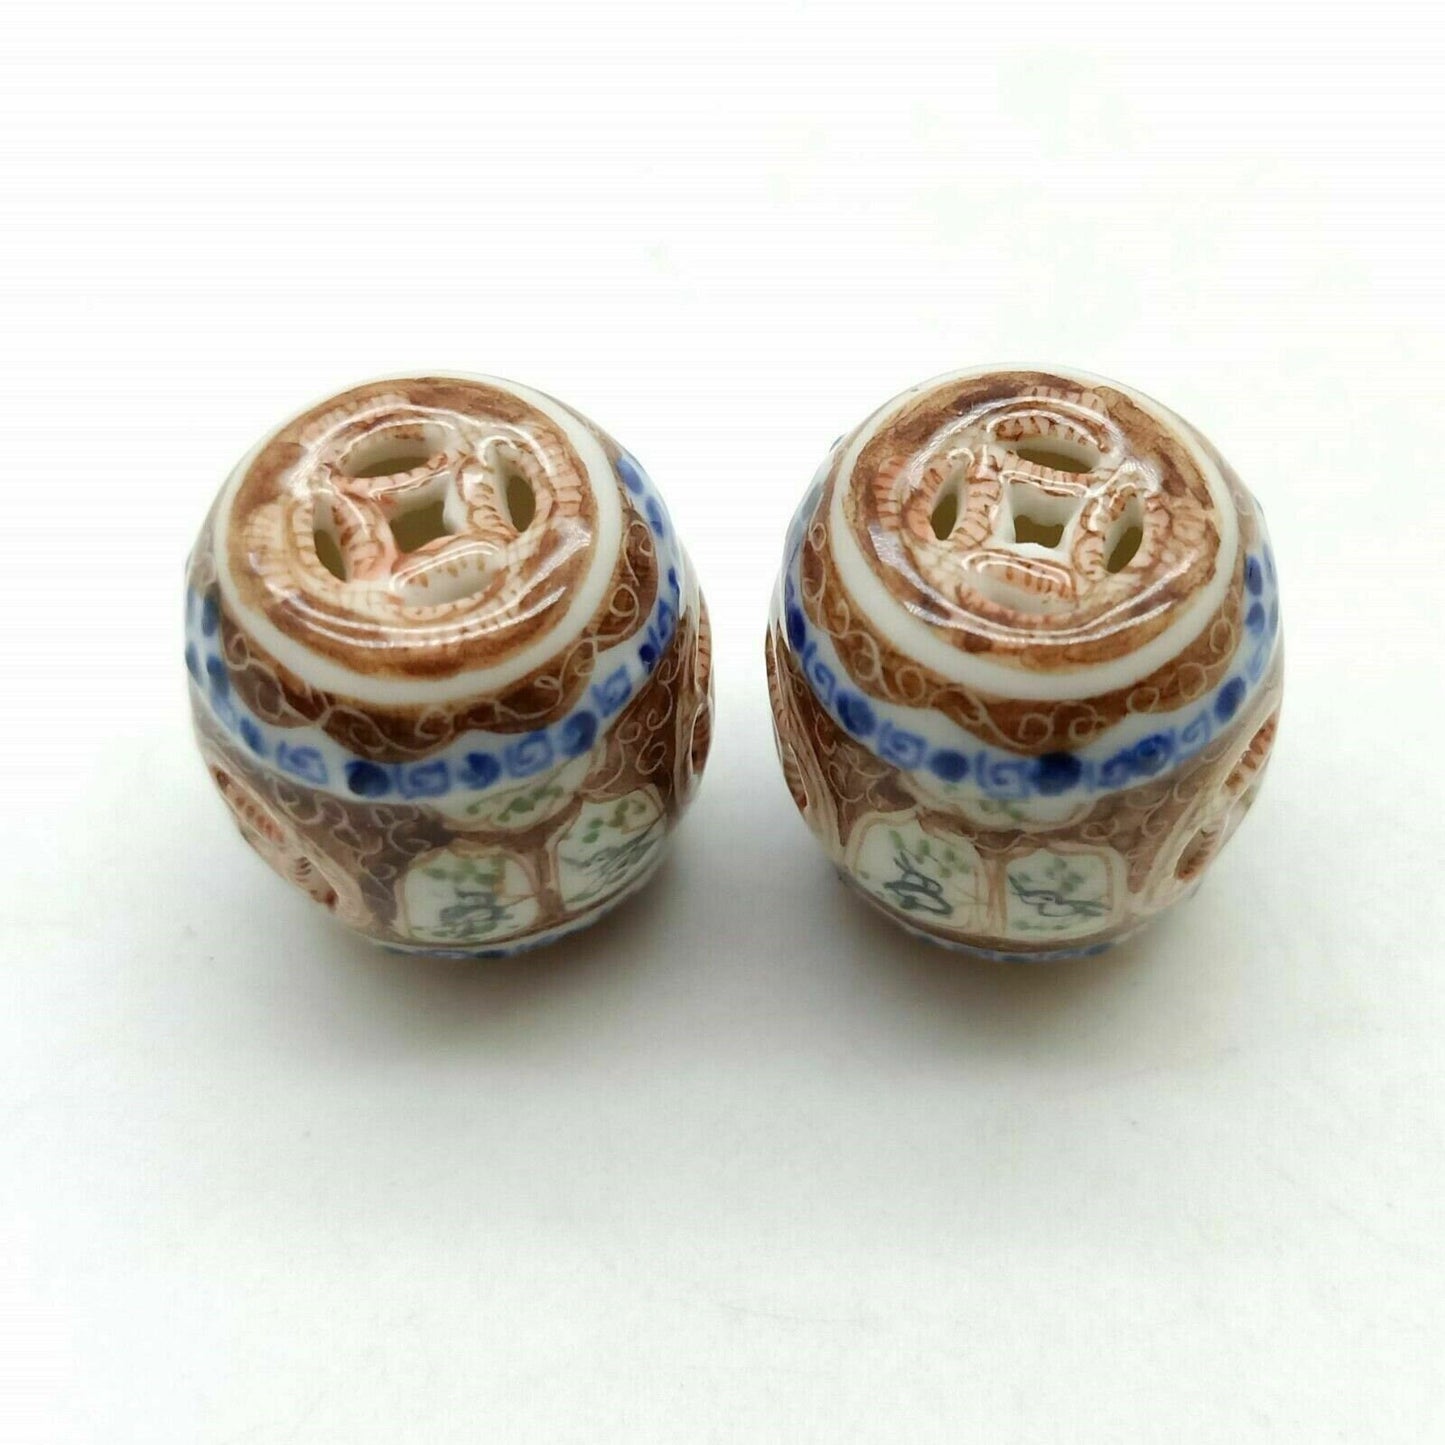 2 Ceramic Chinese Garden Stools | 2.5 cm. Tall